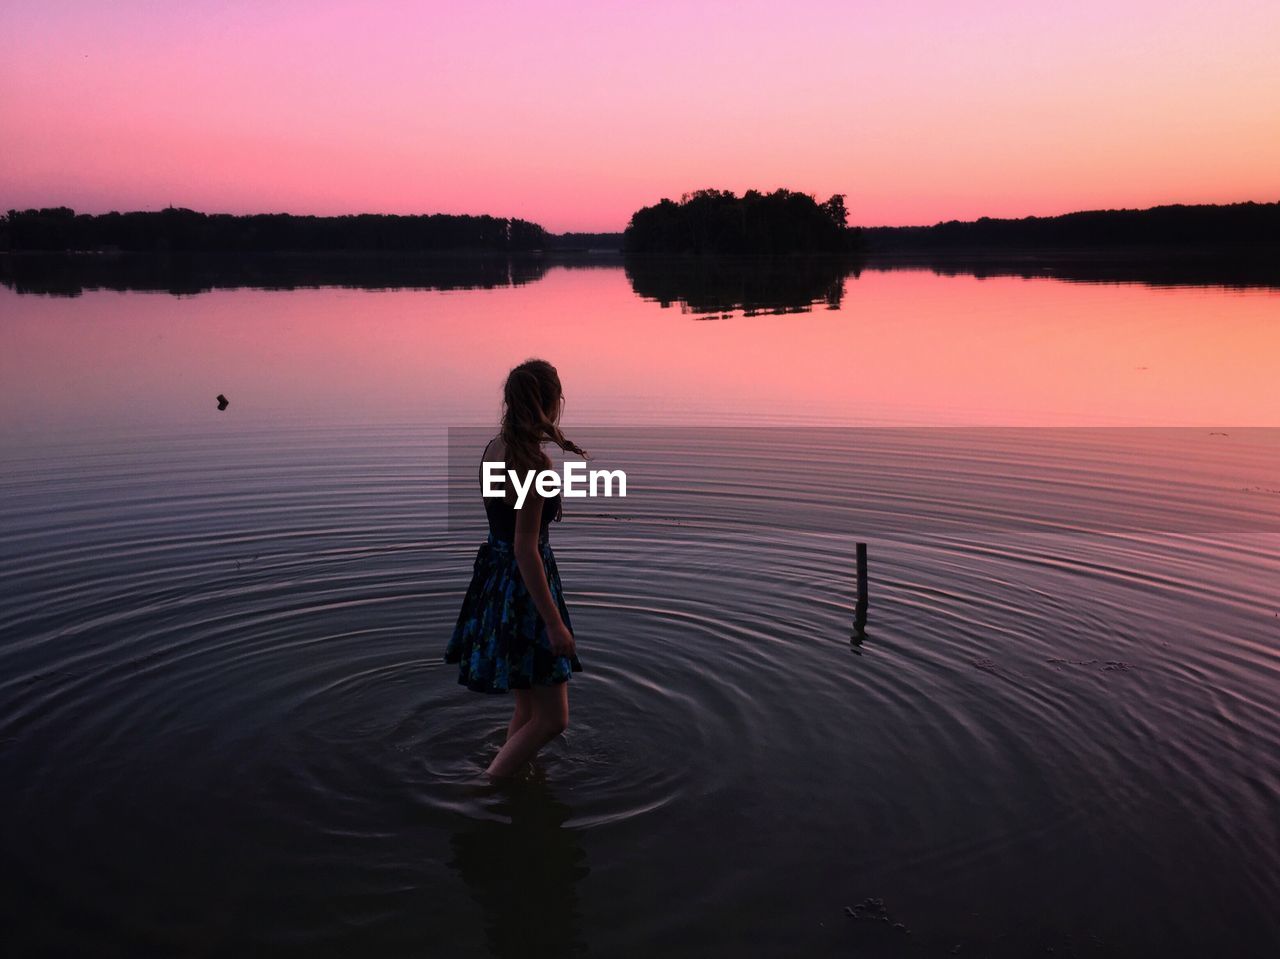 Woman in lake during sunset